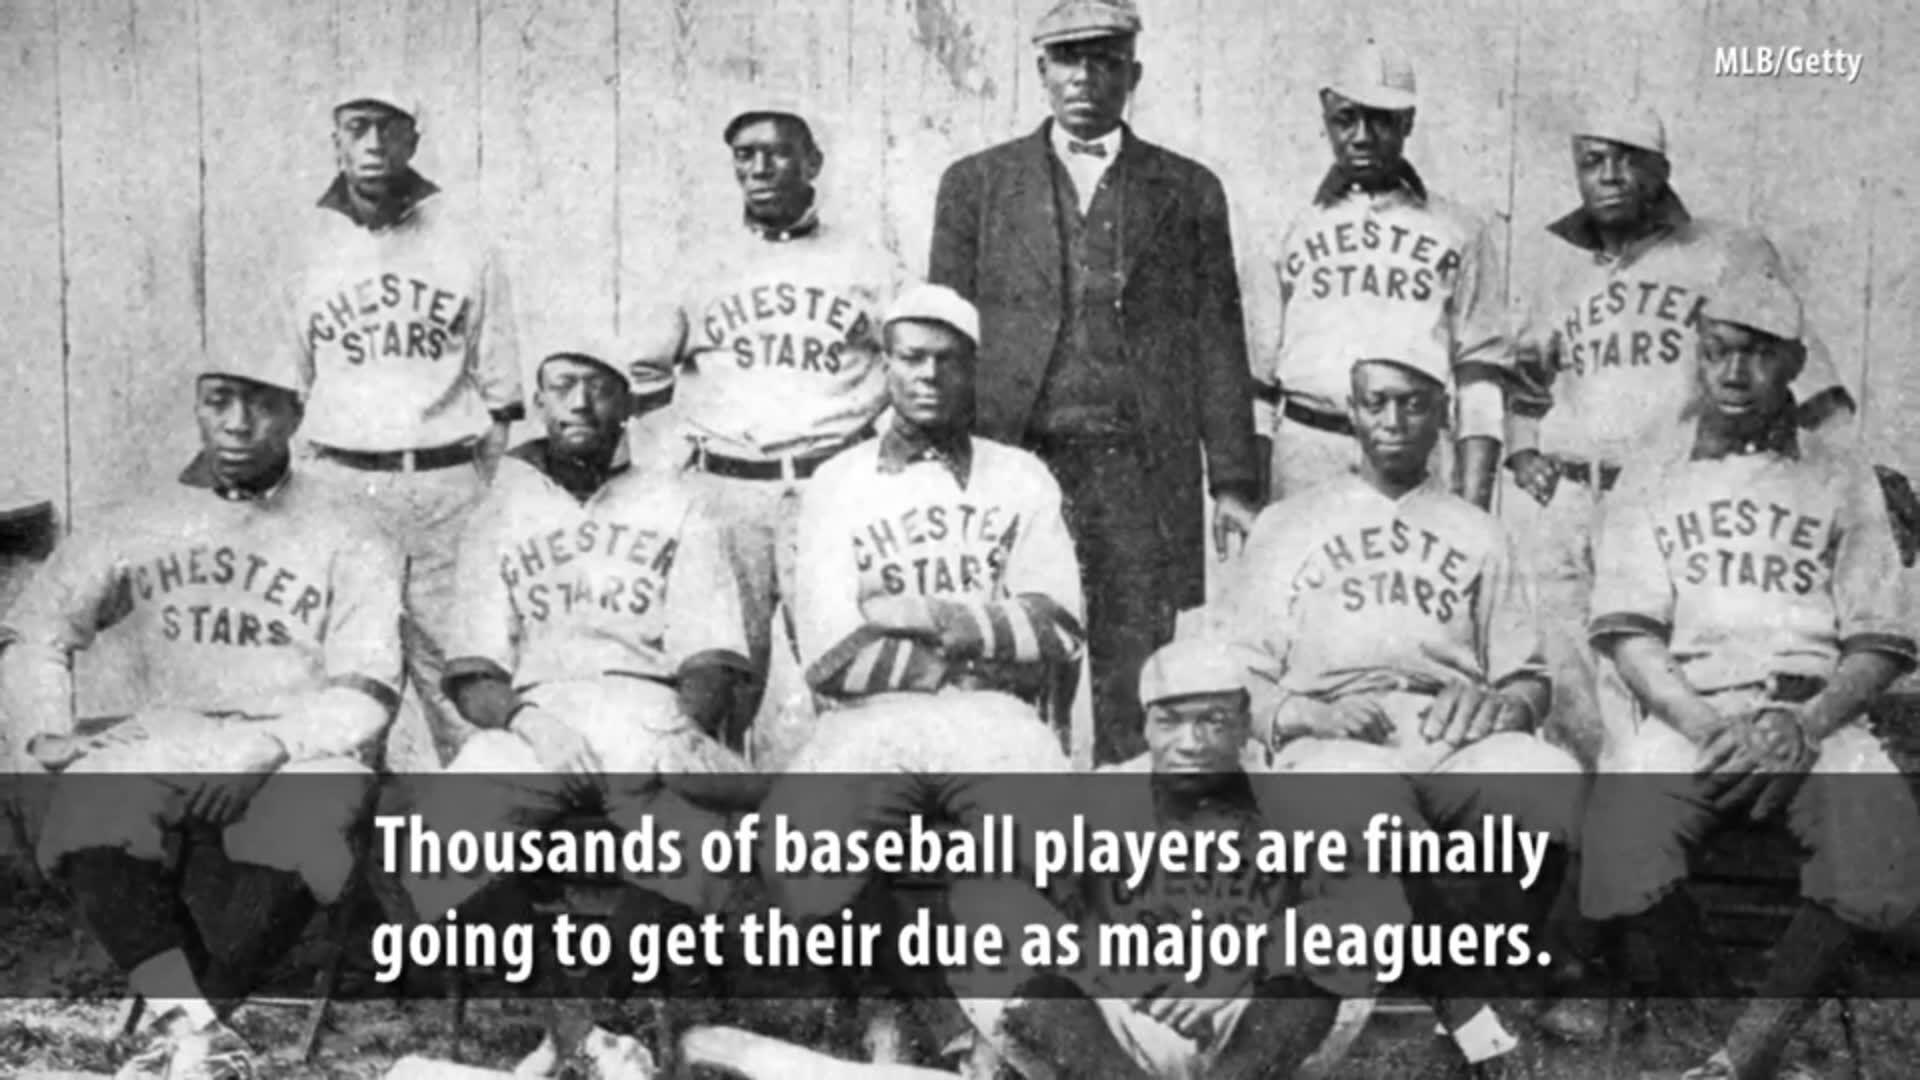 MLB officially recognizes Negro Leagues as major league baseball